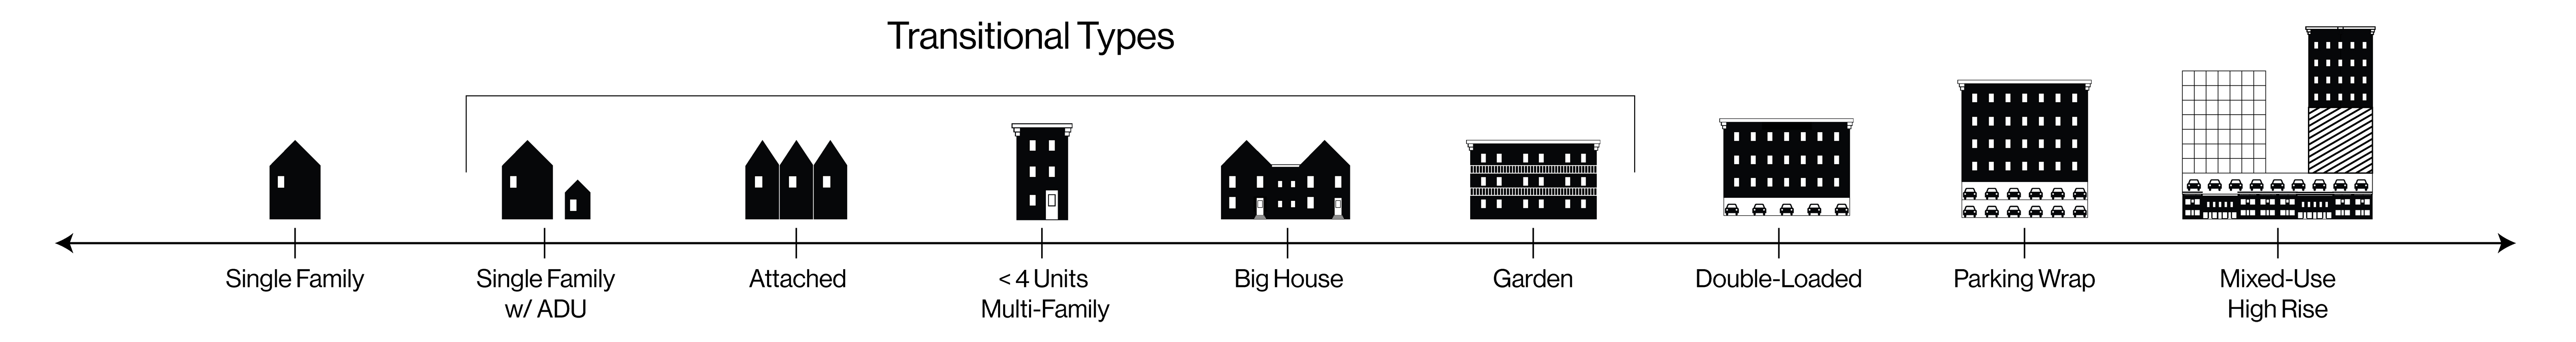 crescent-housing-types